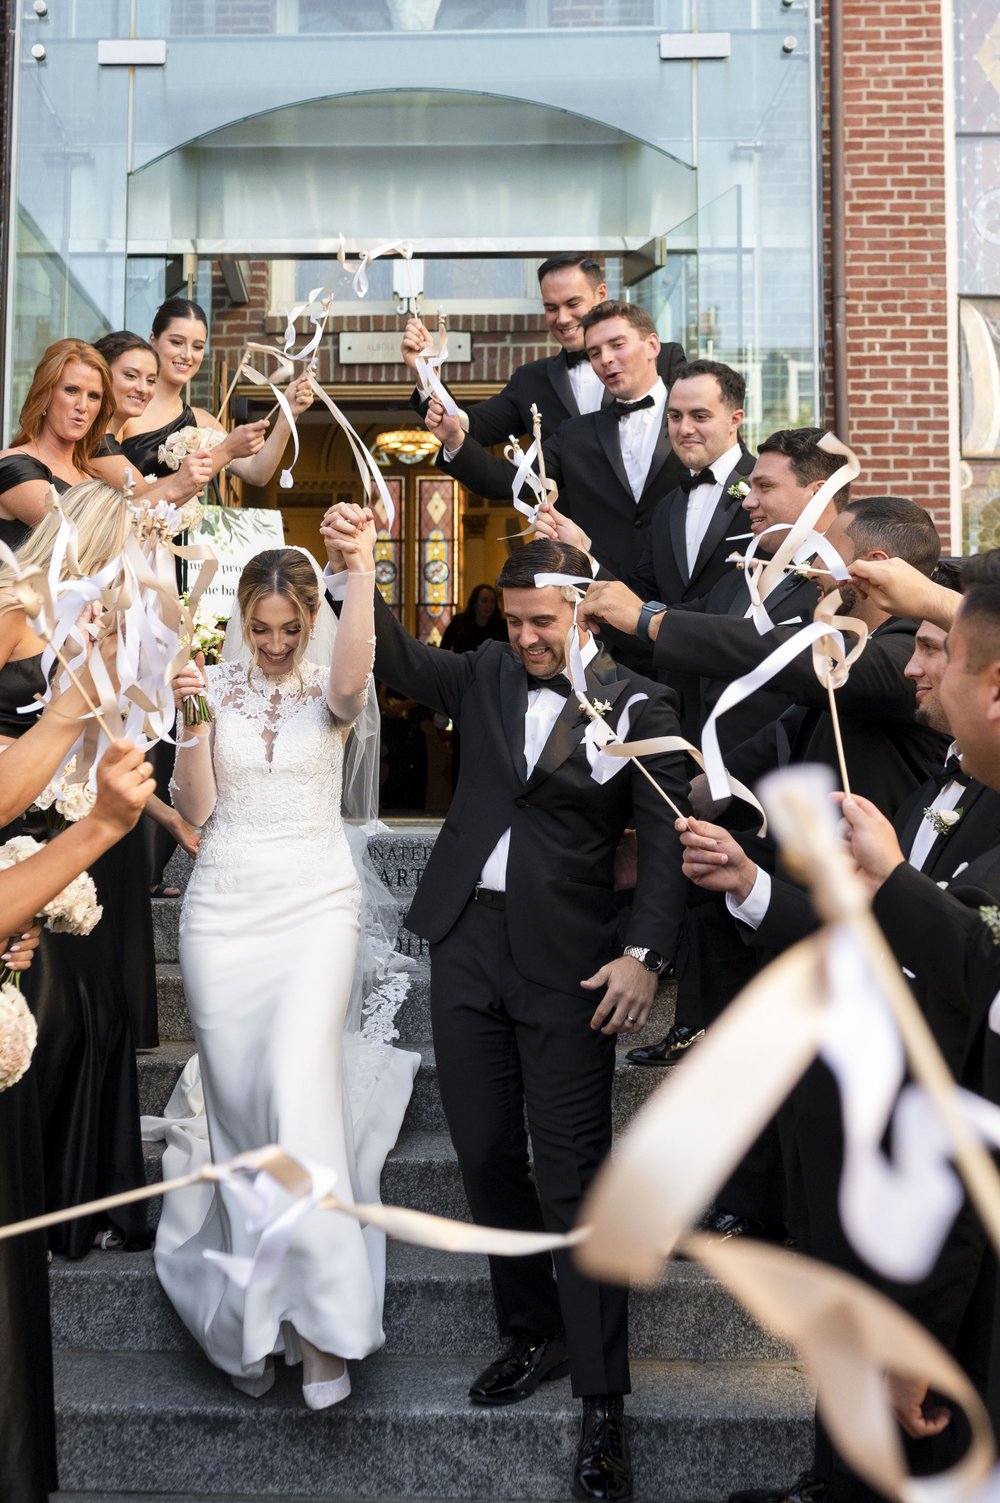 bridal party celebratory wedding photos in Boston